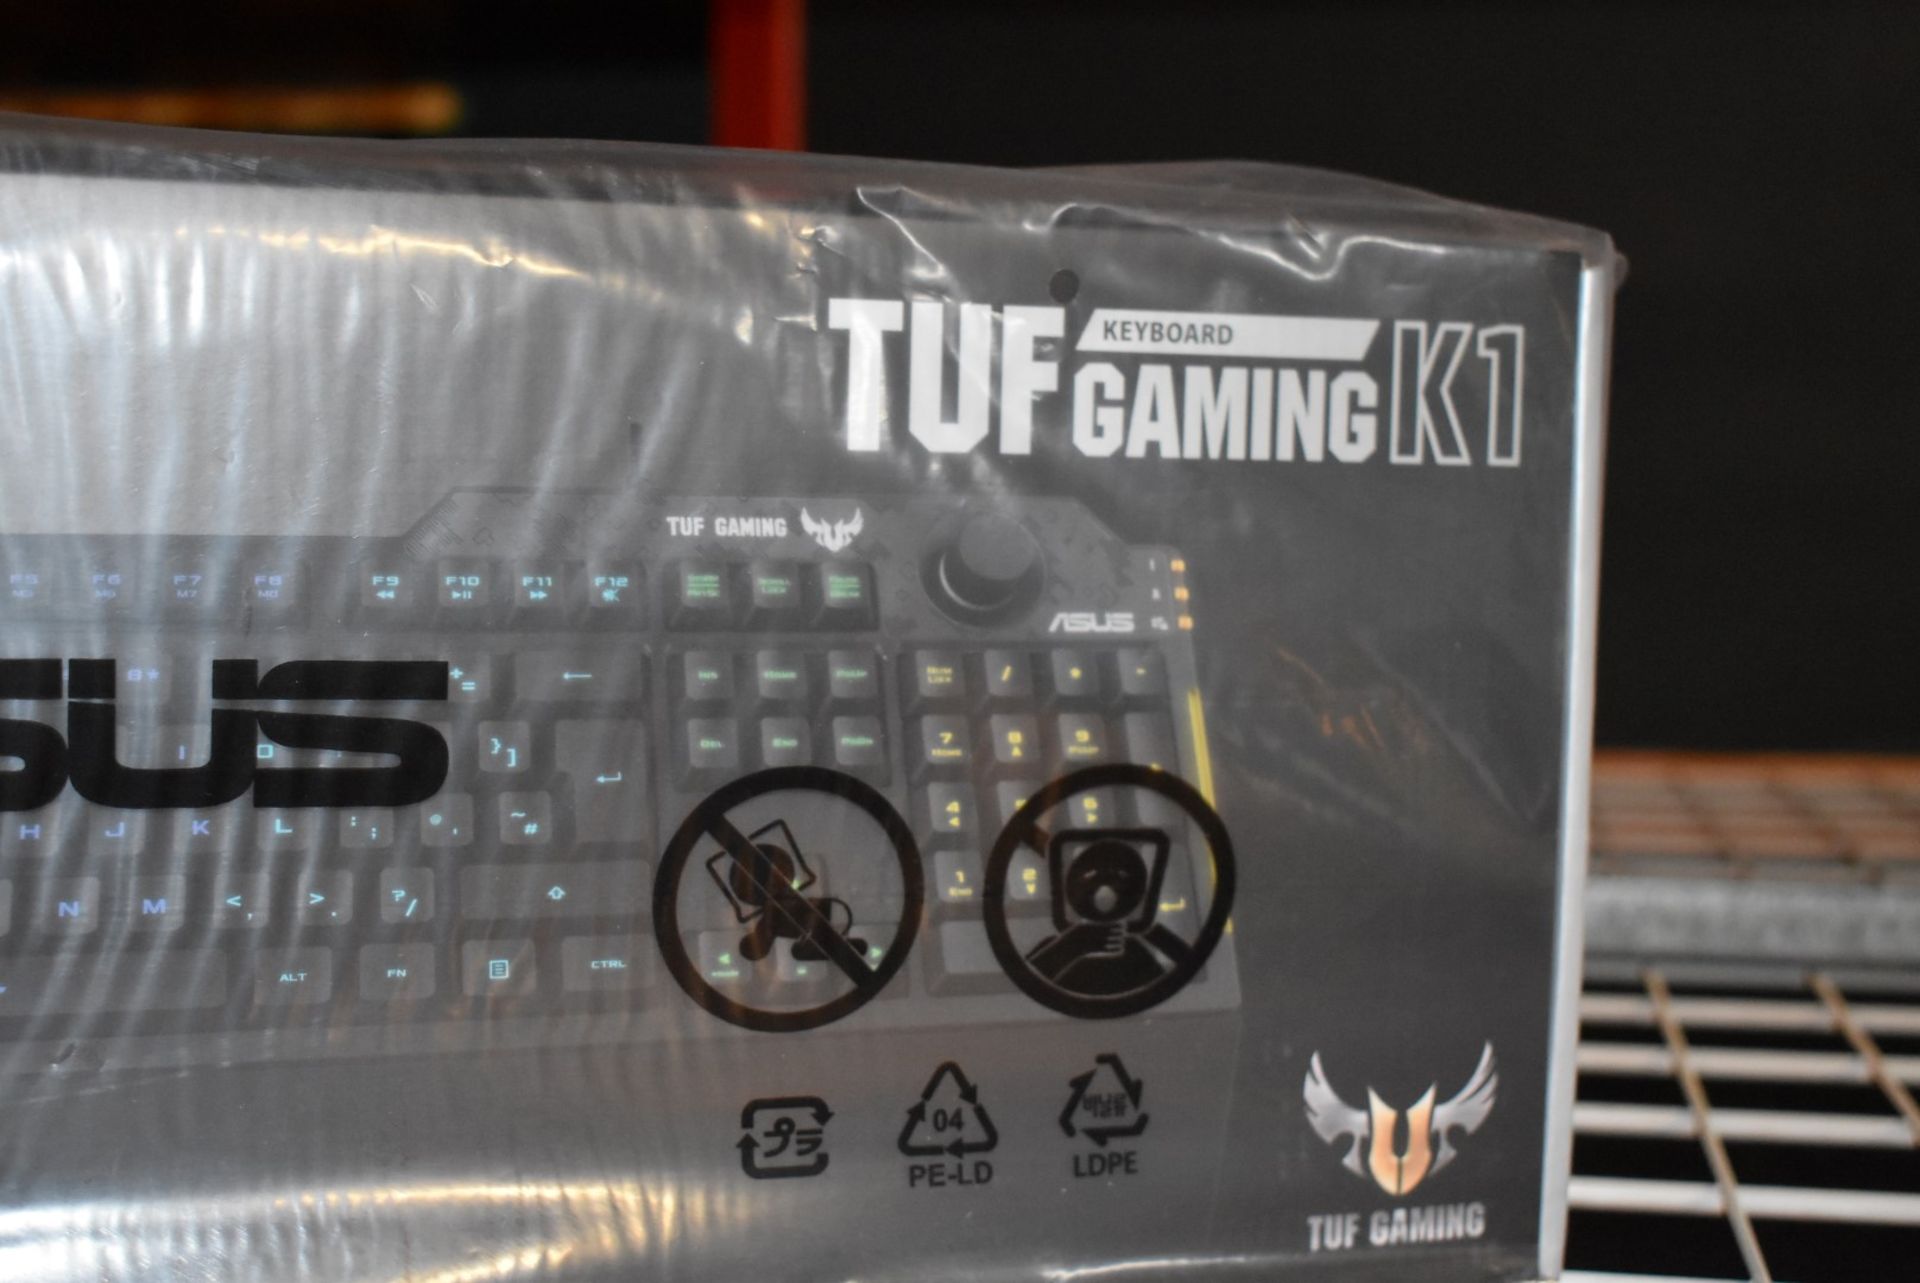 1 x Asus TUF K1 RGB Gaming Keyboard - New Boxed Stock - RRP £49.99 - Image 3 of 3